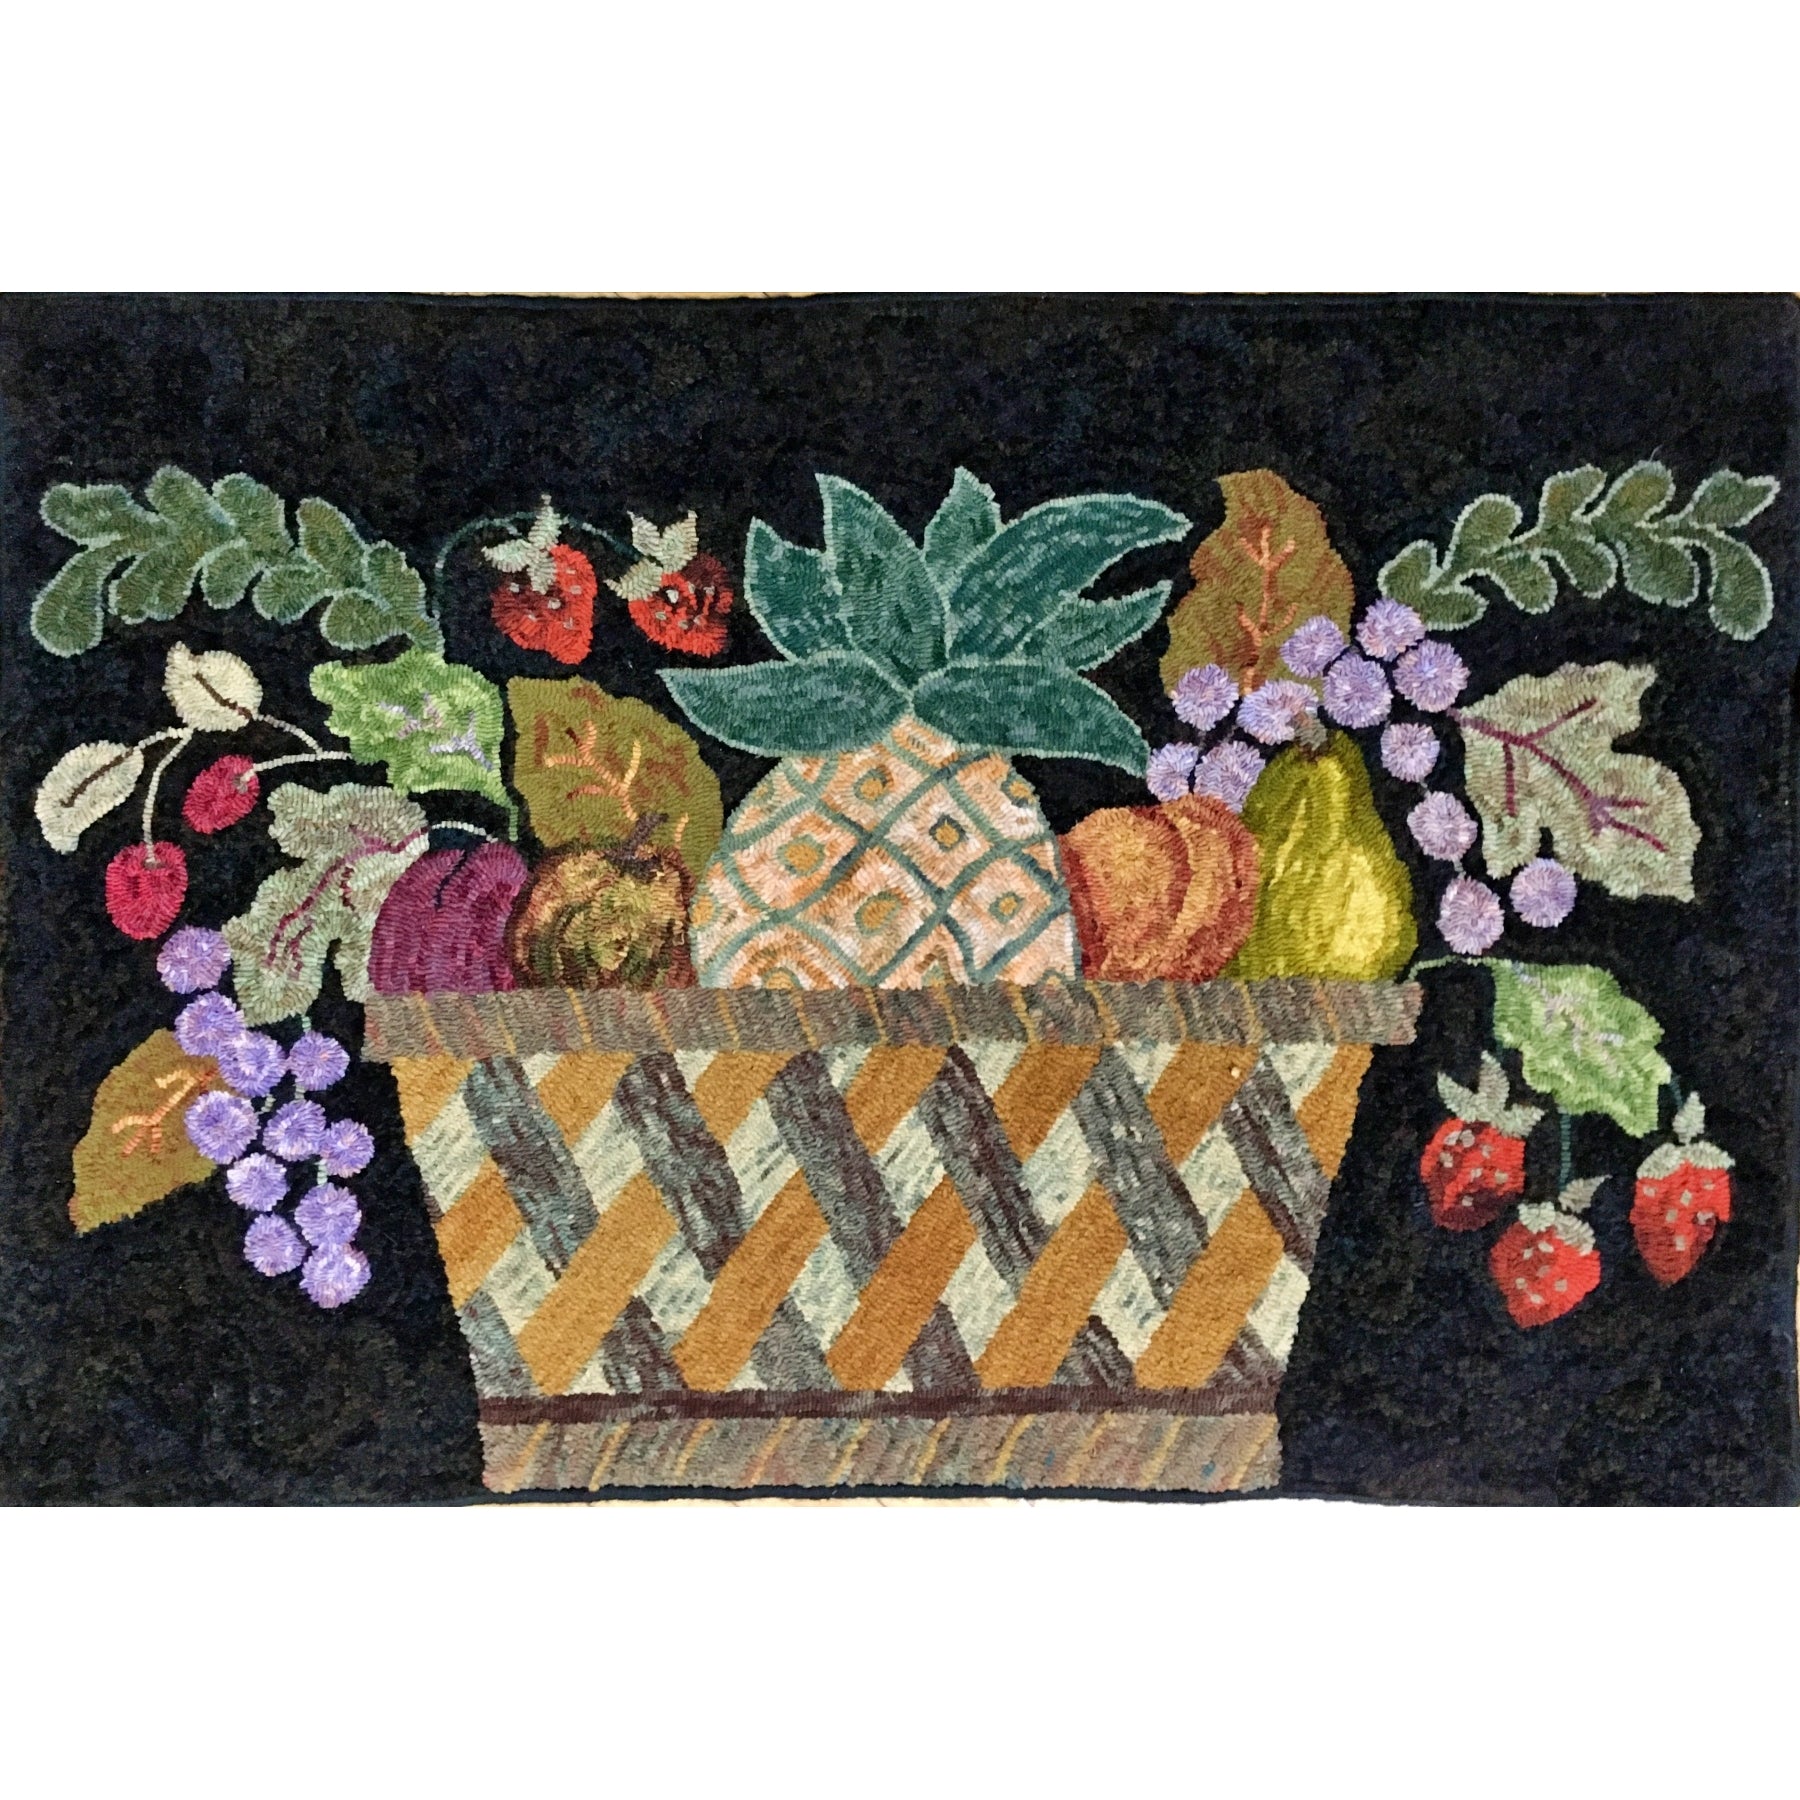 Caswell Fruit Basket, rug hooked by Dawn Hebert